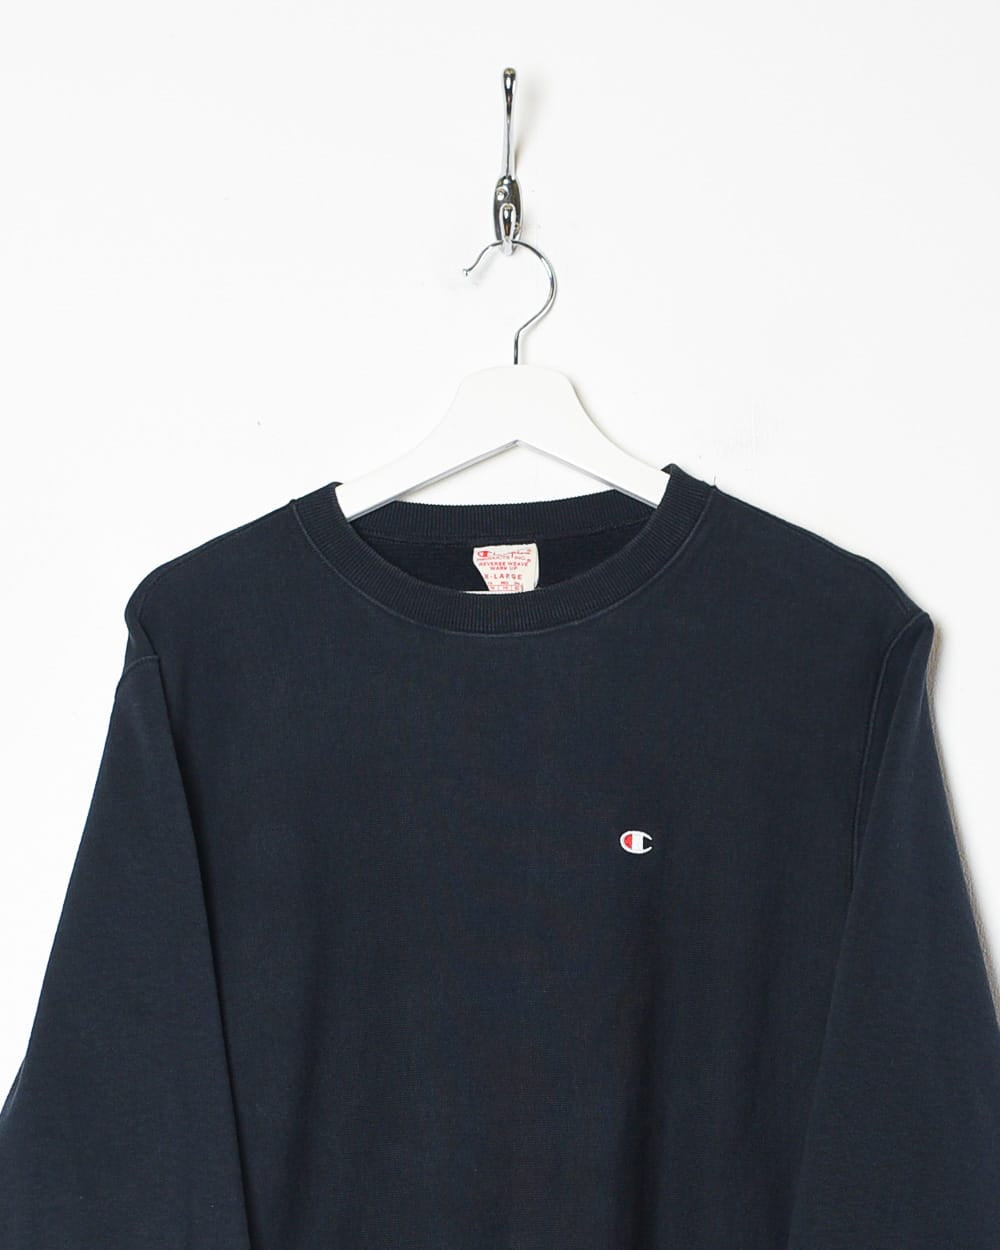 Black Champion Reverse Weave Sweatshirt - Small